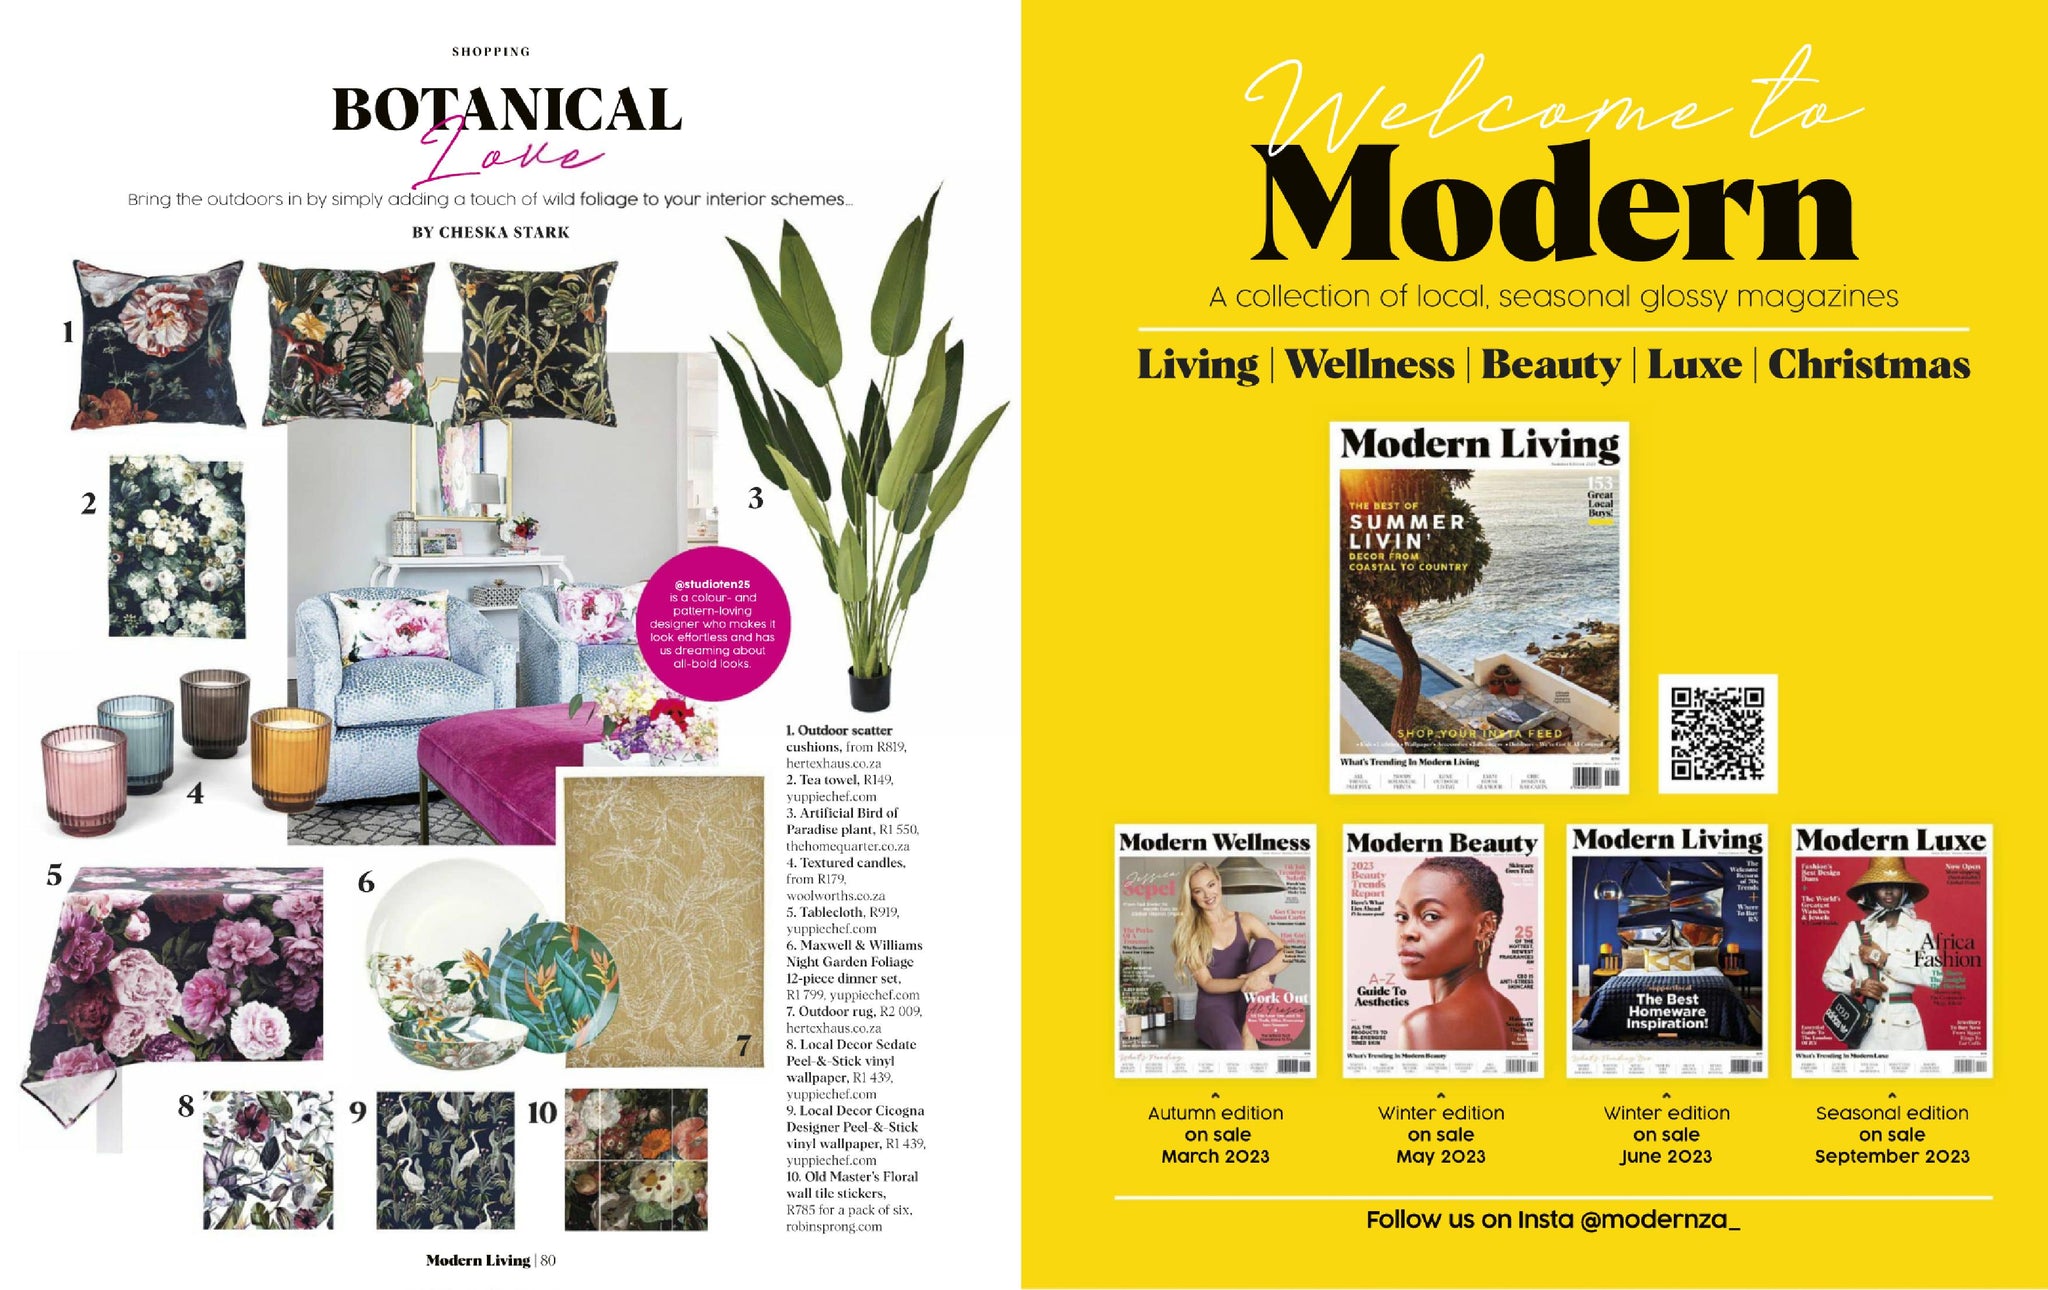 Modern living magazine summer 2023 issue